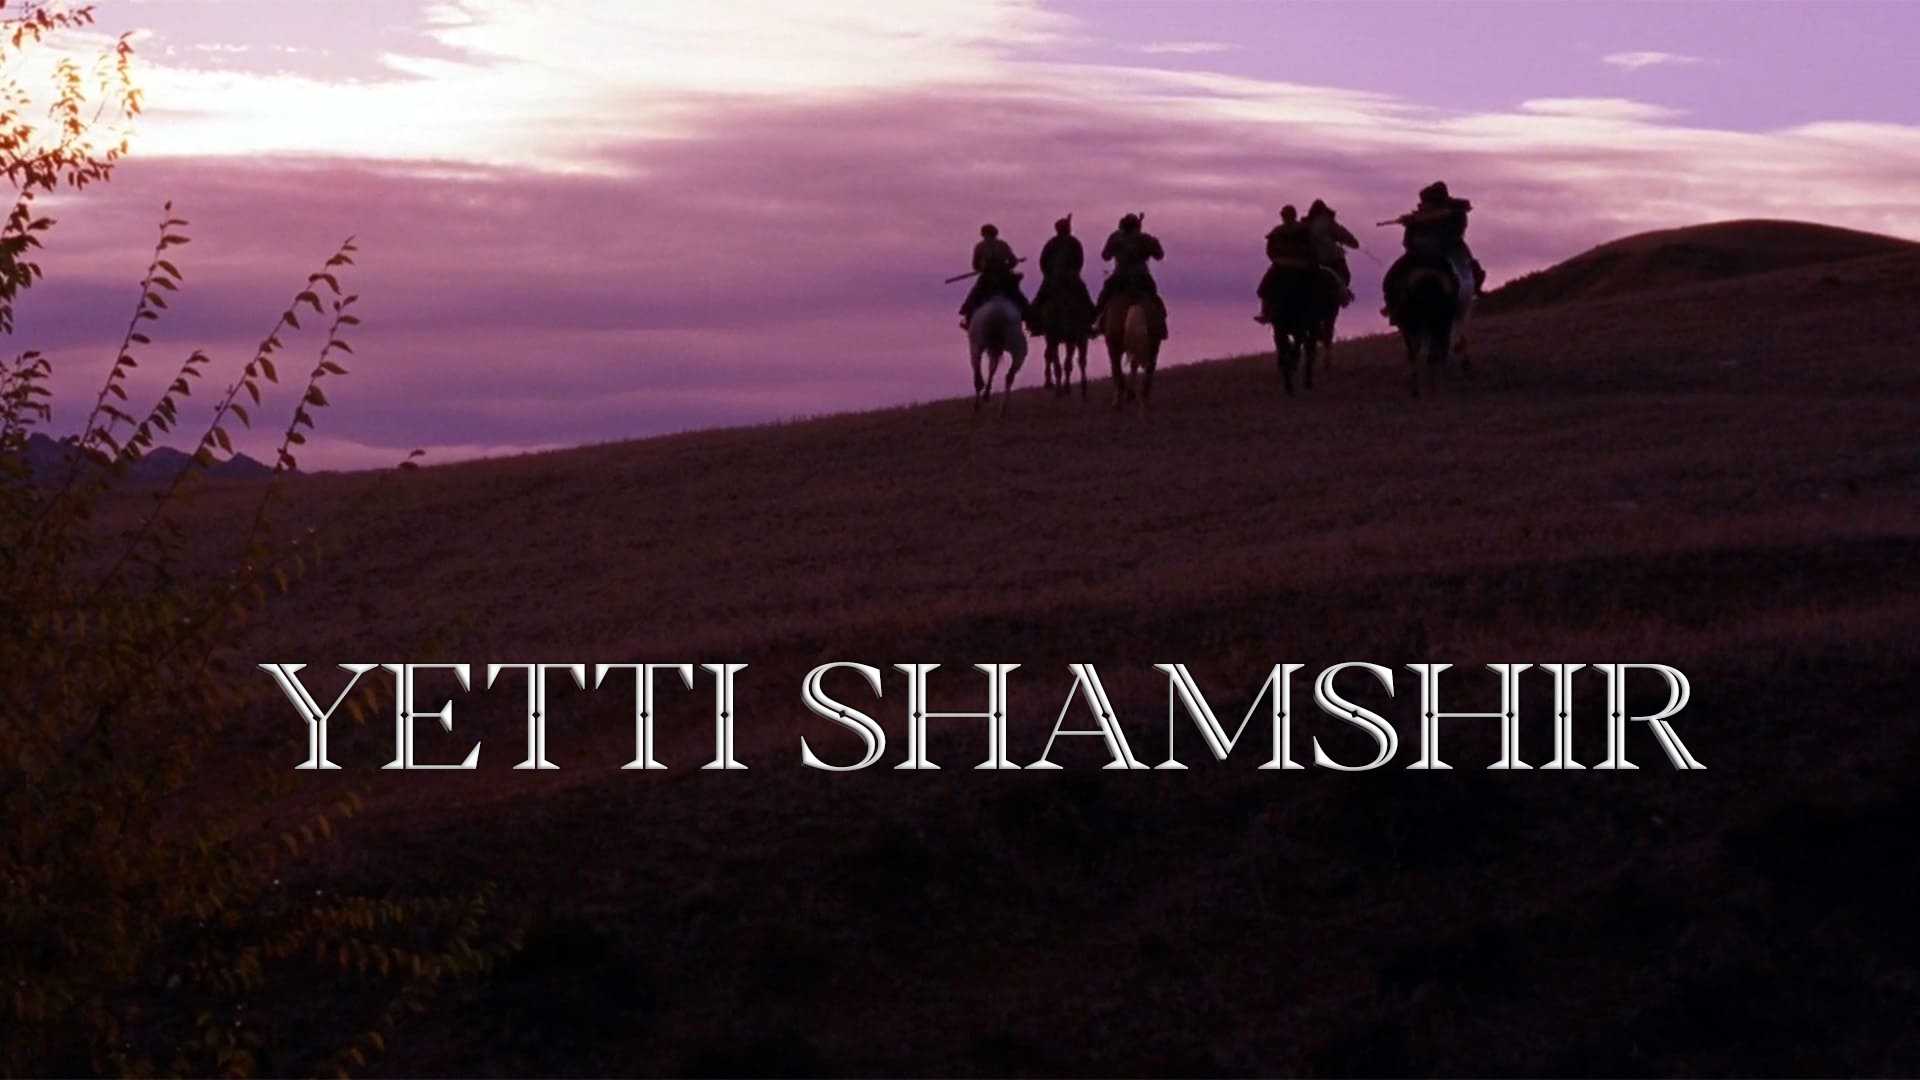 Yetti shamshir